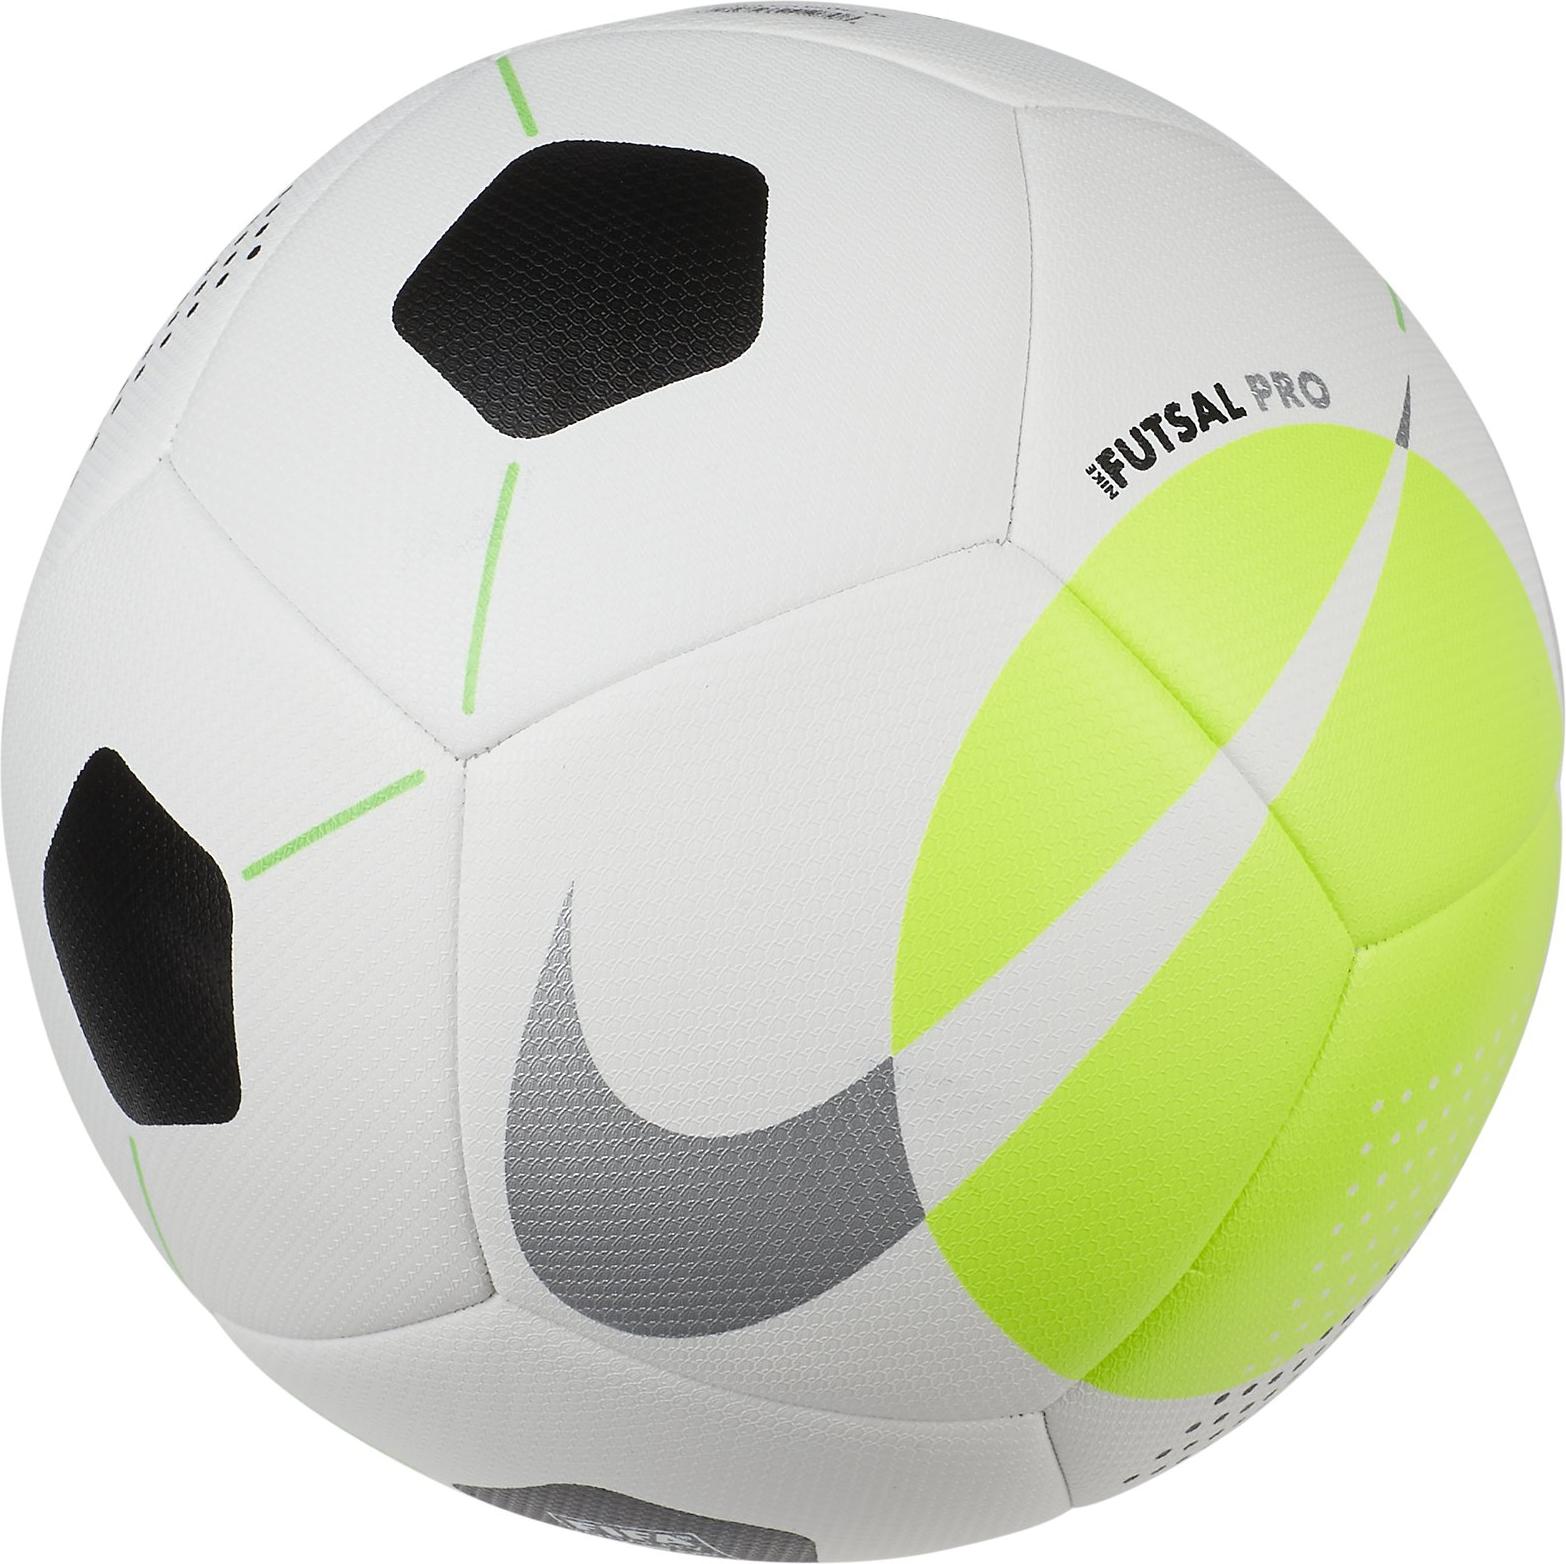 Nike Futsal Pro Soccer Ball